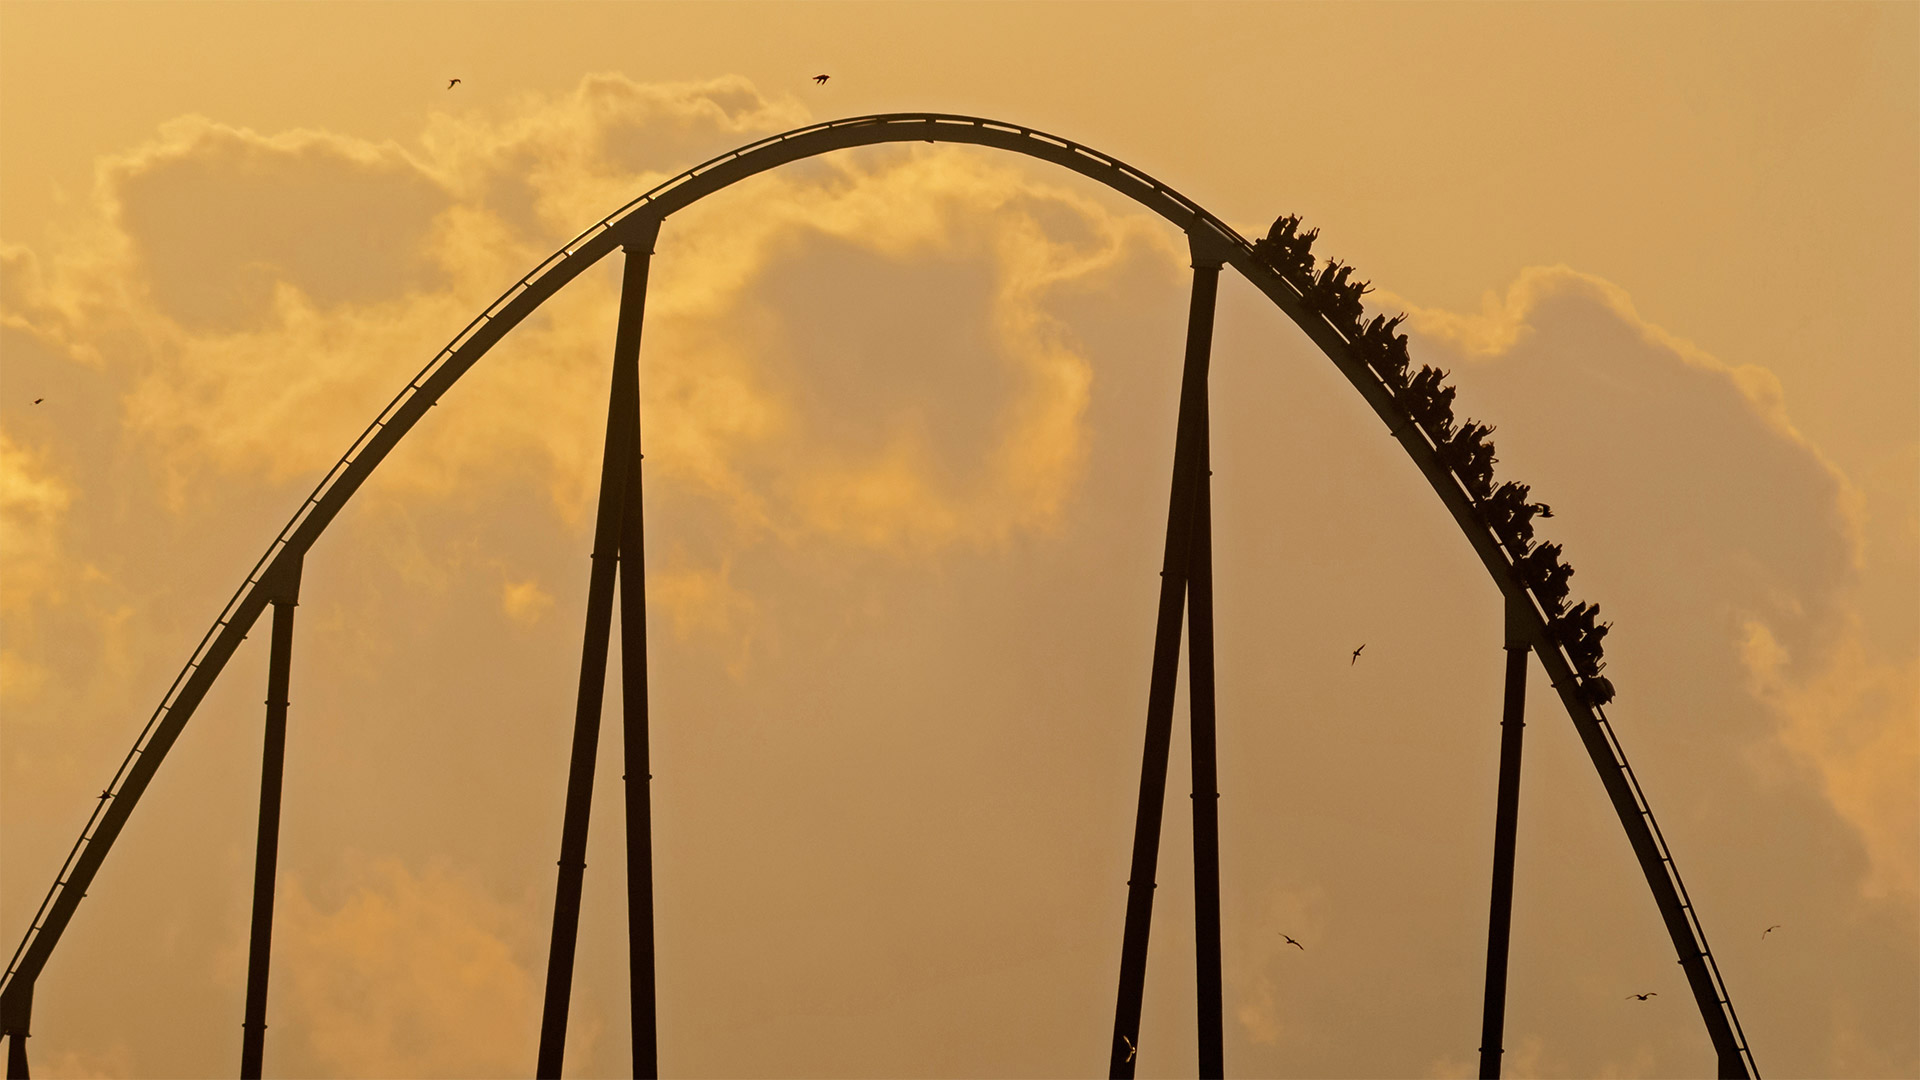 Shambhala roller coaster, PortAventura Park, Salou, Tarragona, Spain (? Joaquim F. P./Getty Images)